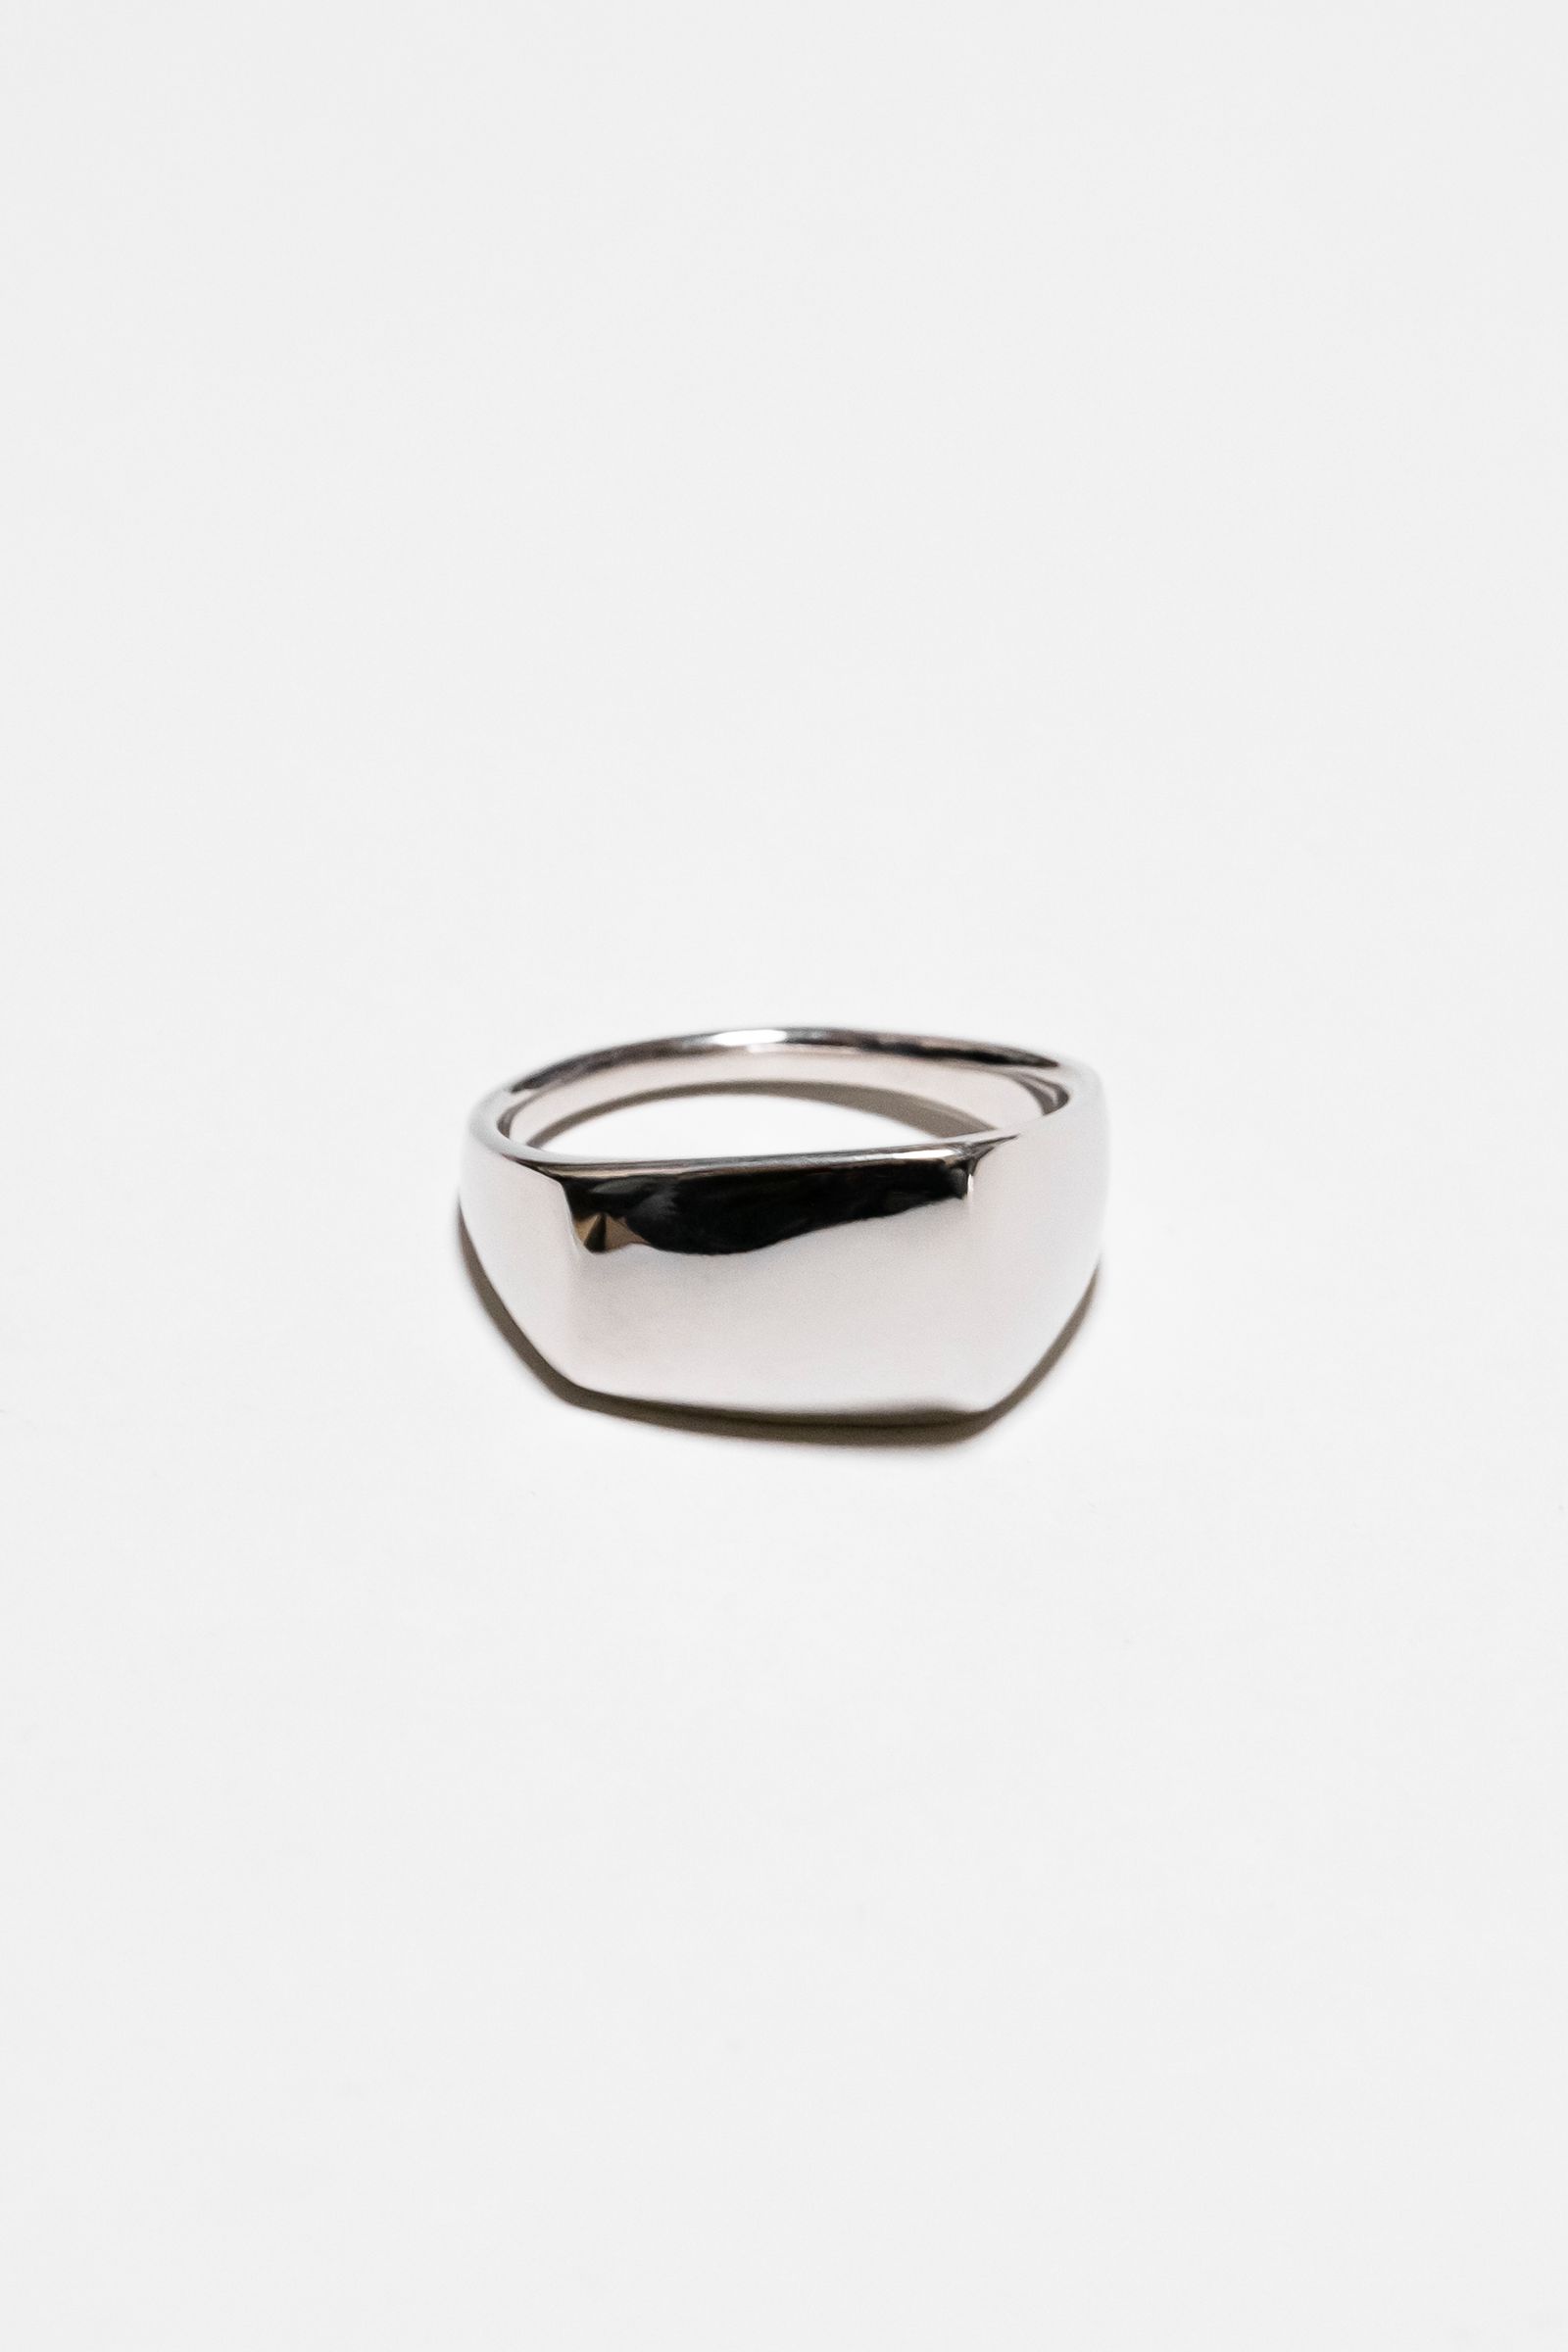 MIRAH - 【オーダー可能】R103 silver925 ring RP | Retikle Online Store